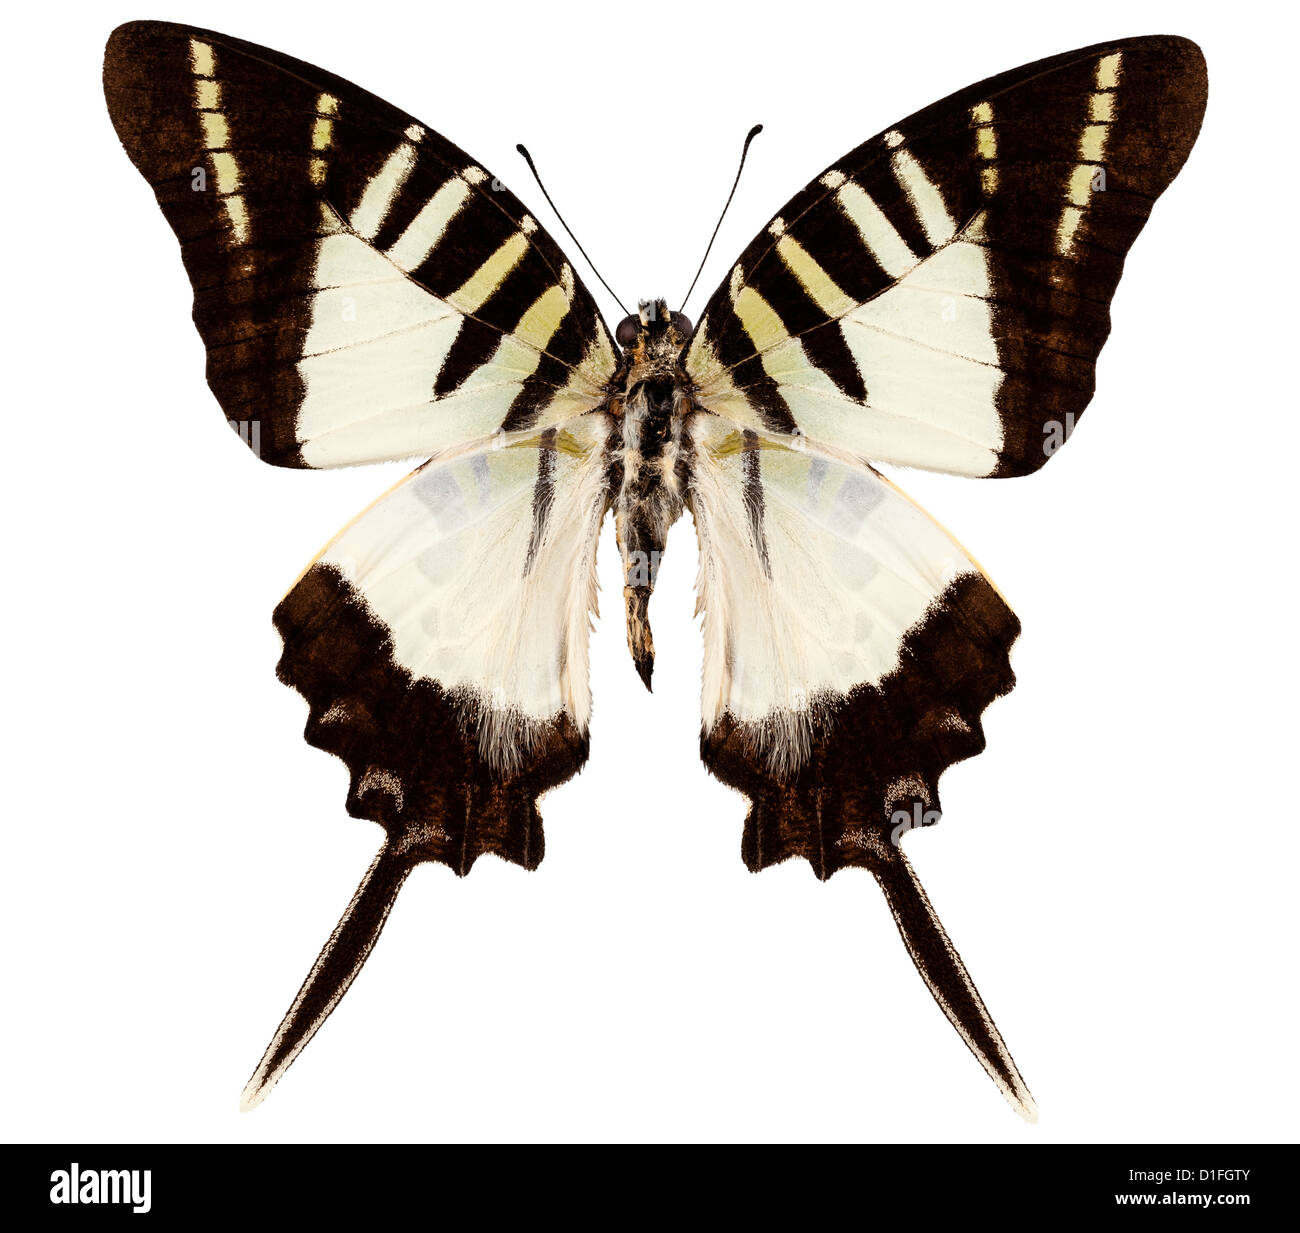 Specie di farfalle graphium decolor atratus Foto Stock